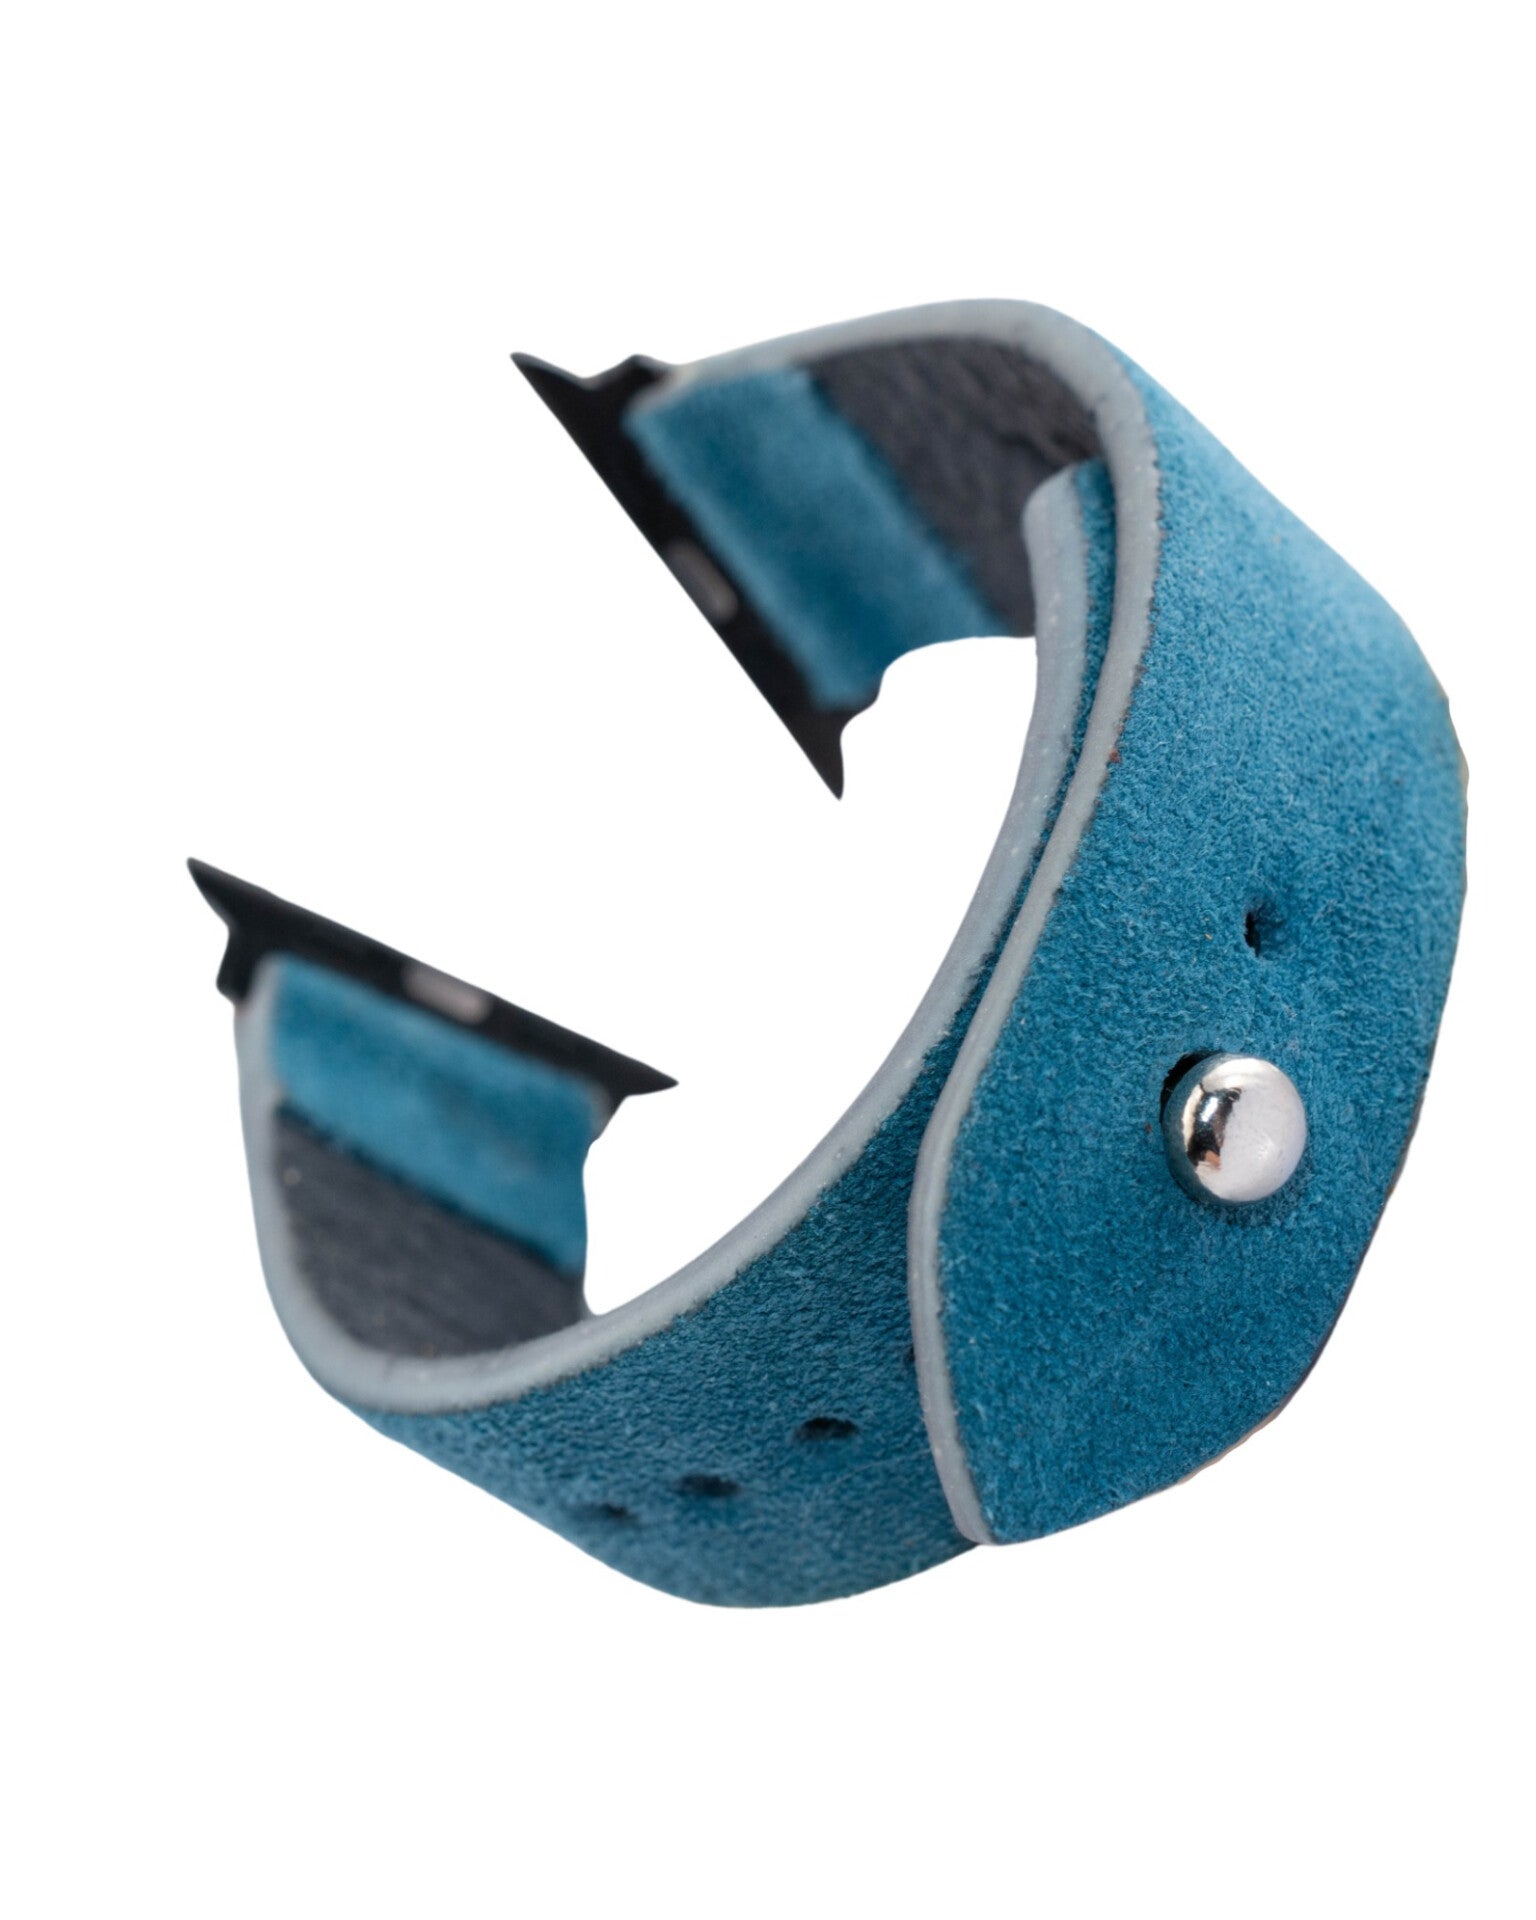 Cyan Blue Apple Watch Strap - Suede Leather Strap